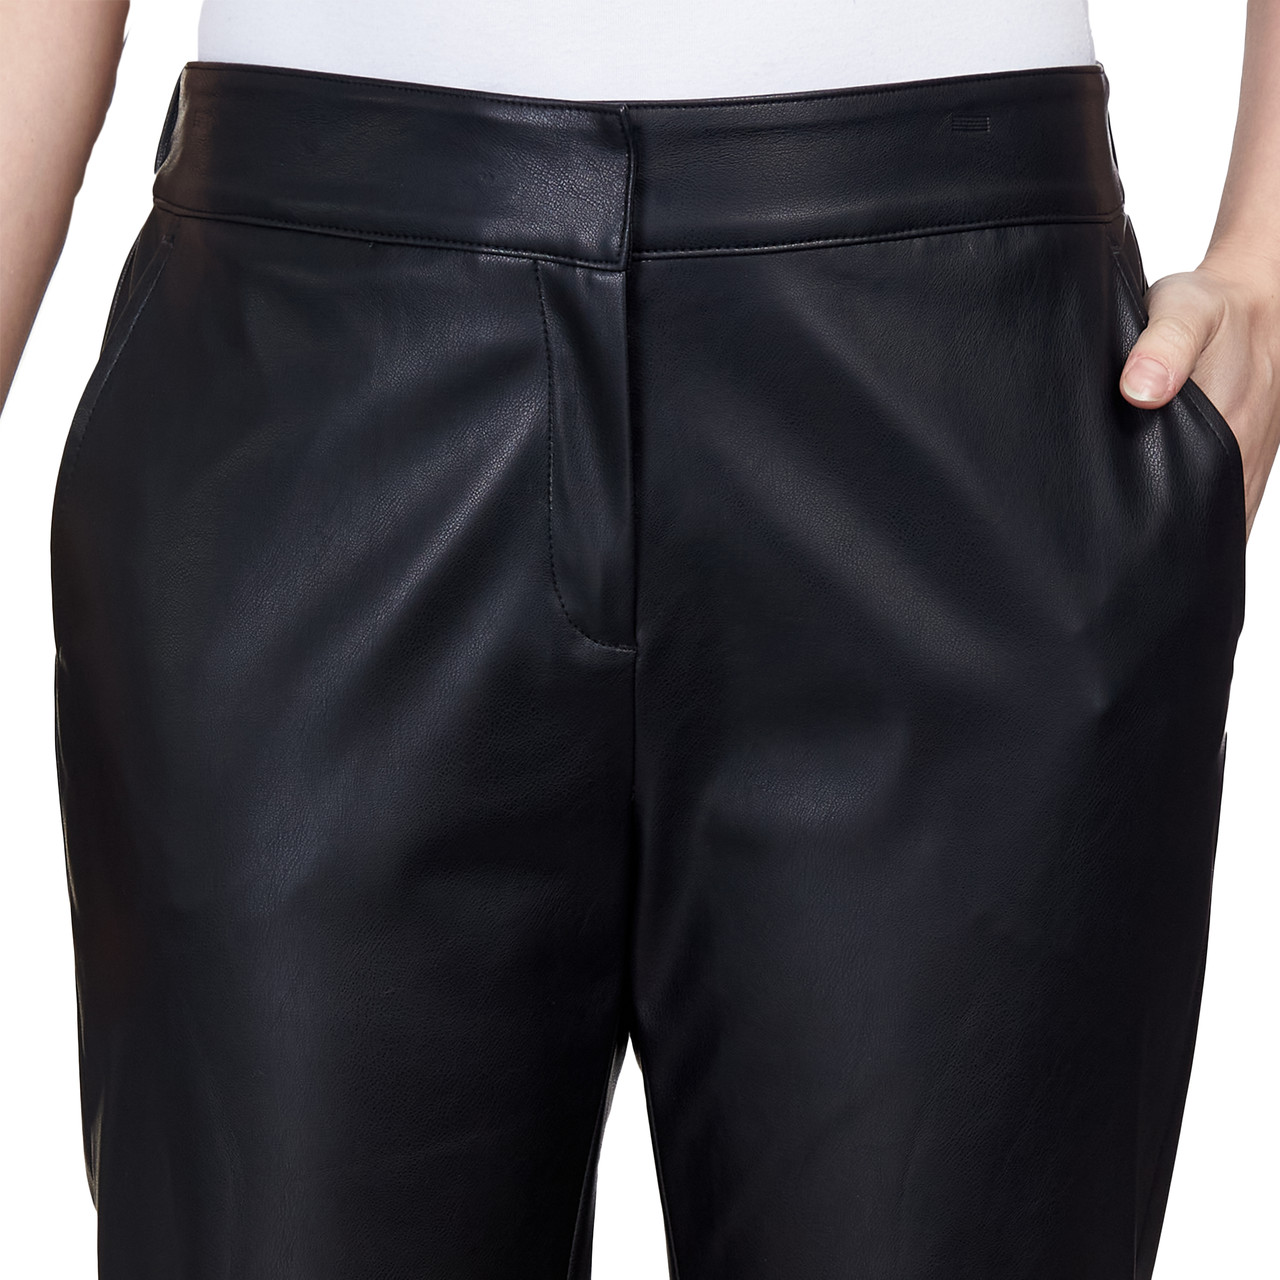 Petite Black Faux Leather Pants, Petite